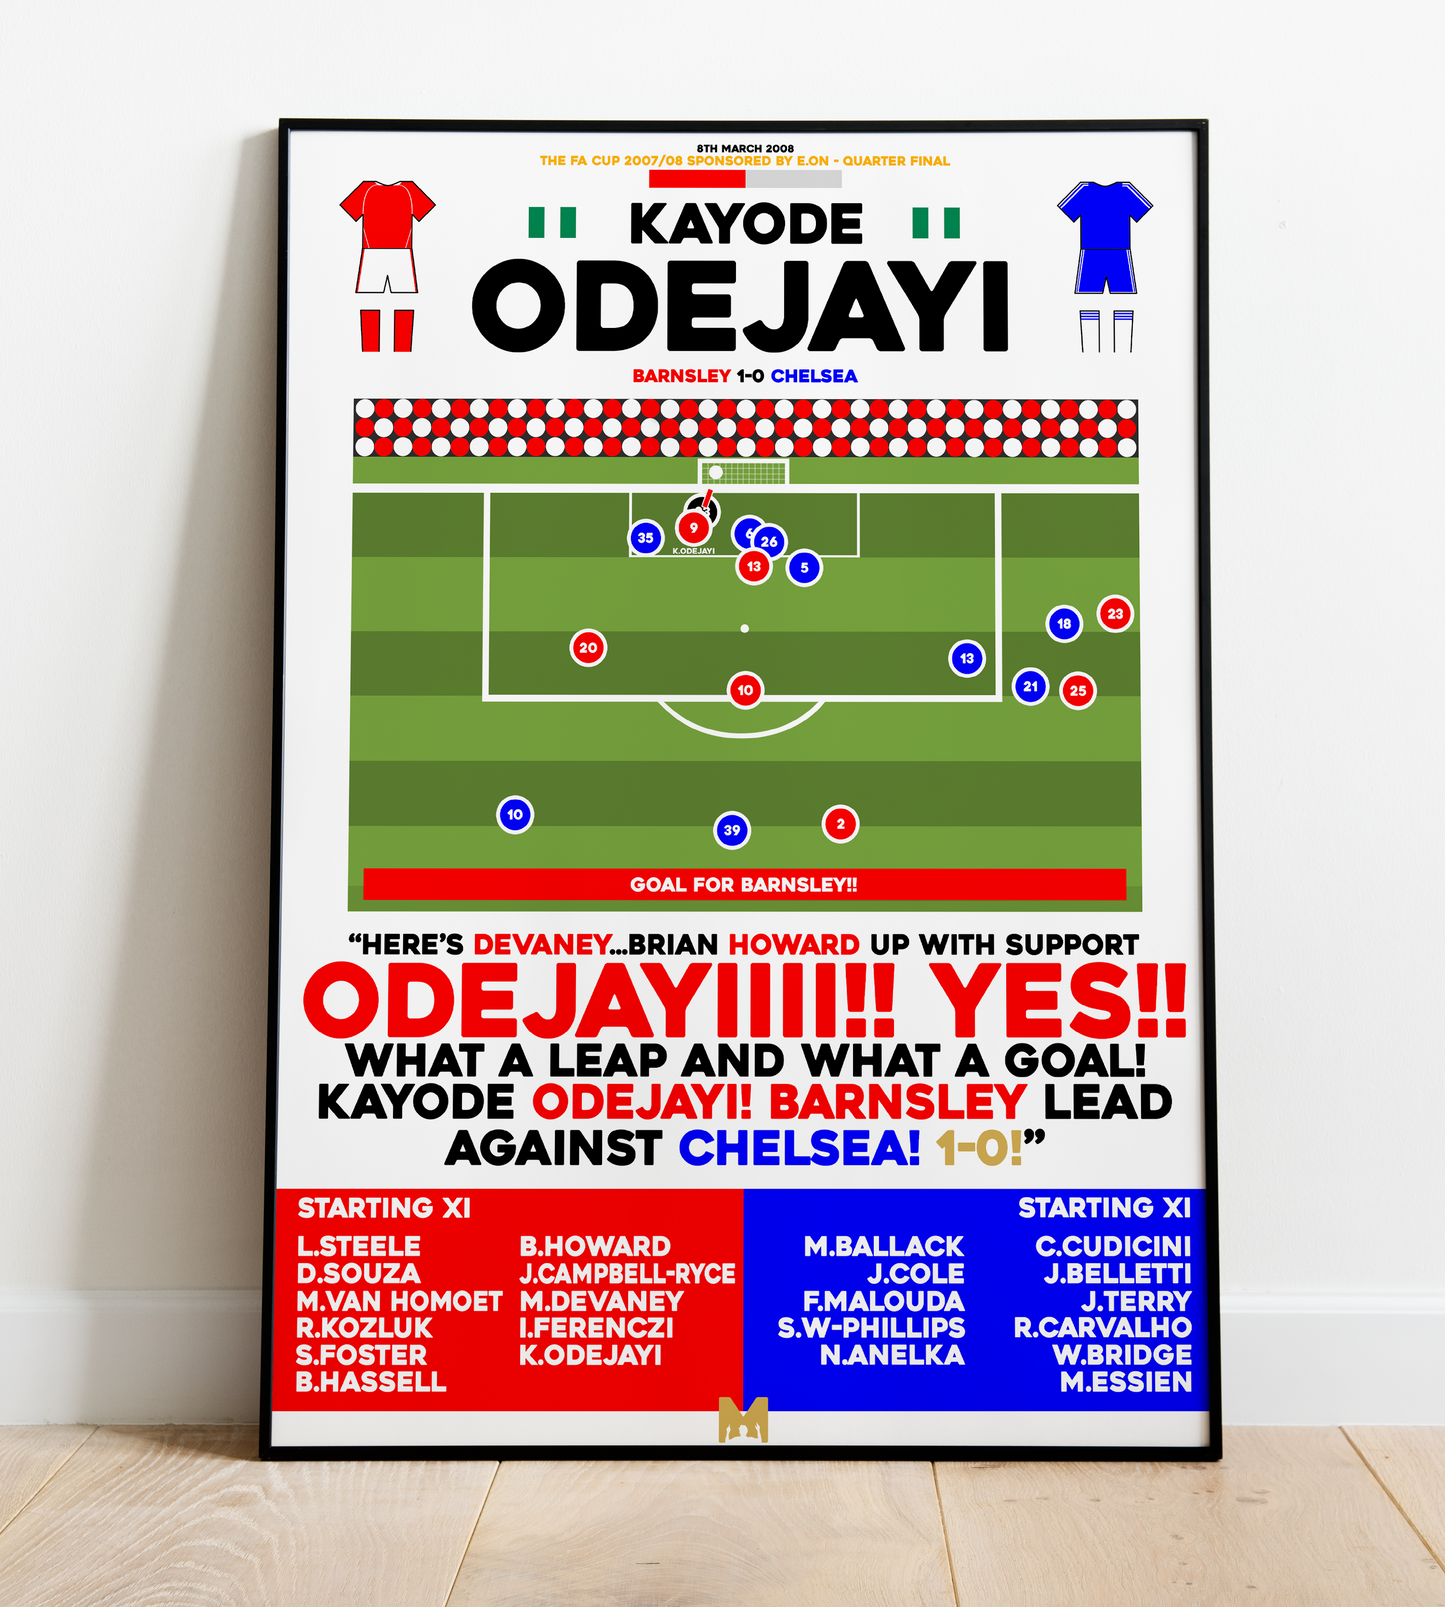 Kayode Odejayi Goal vs Chelsea - FA Cup 2008 - Barnsley